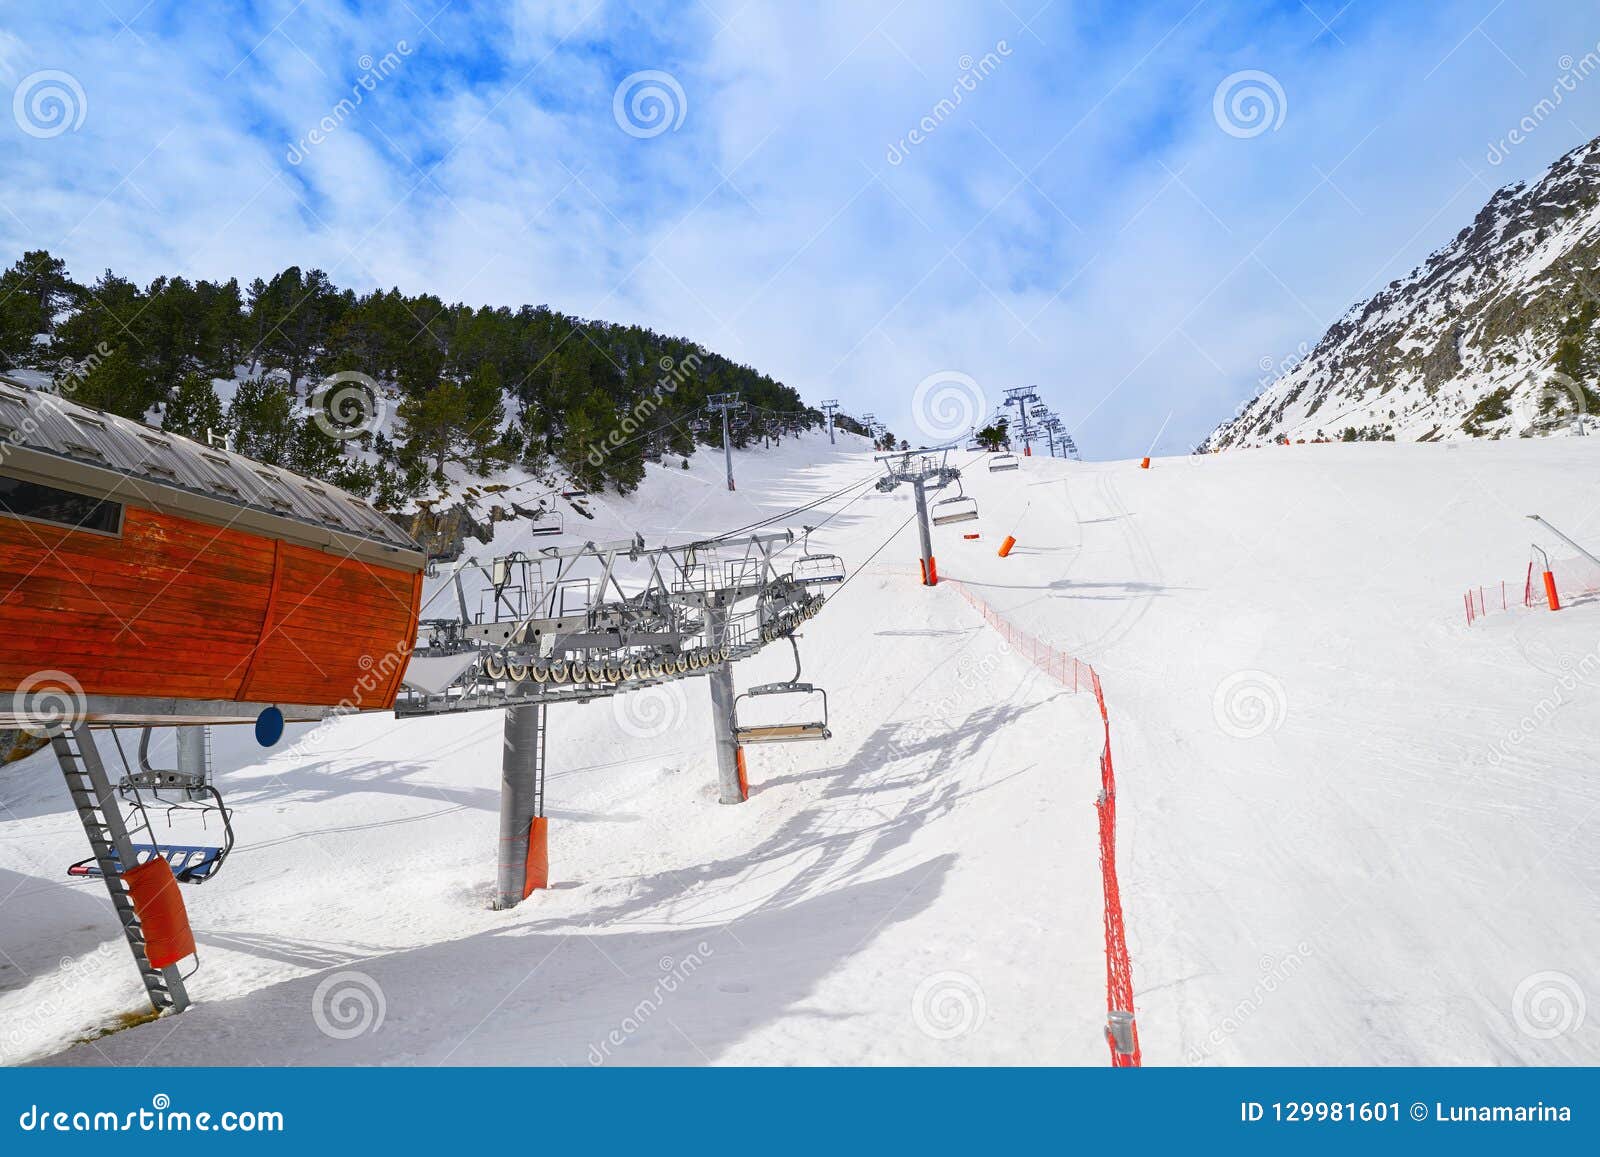 arinsal ski resort in andorra pyrenees